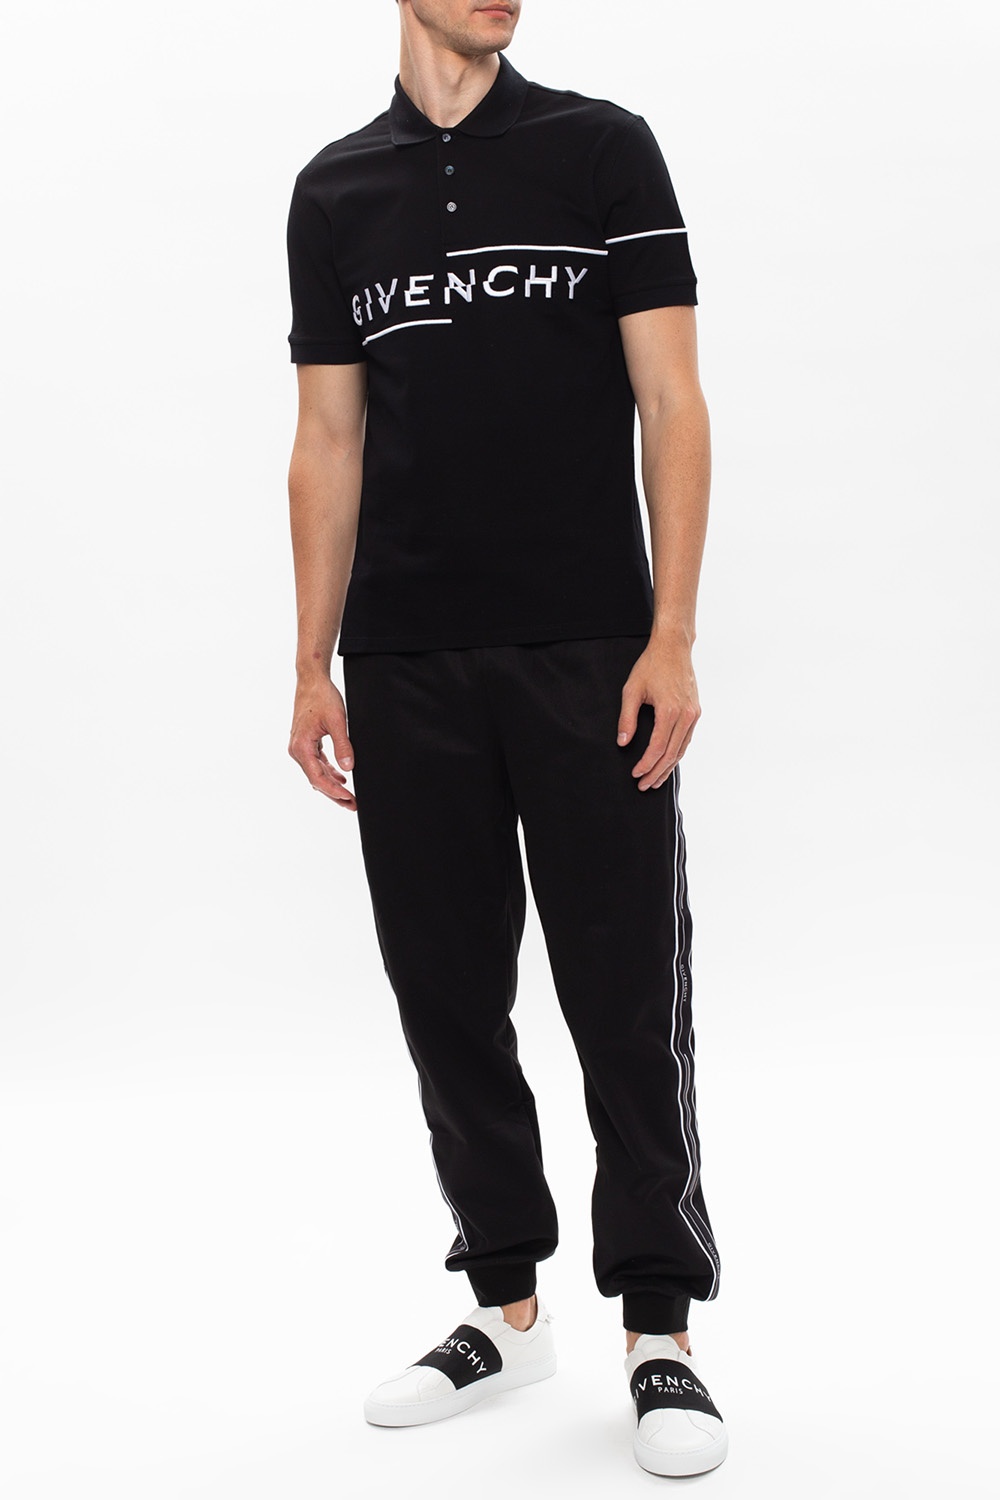 Givenchy Logo-embroidered polo shirt | Men's Clothing | Vitkac